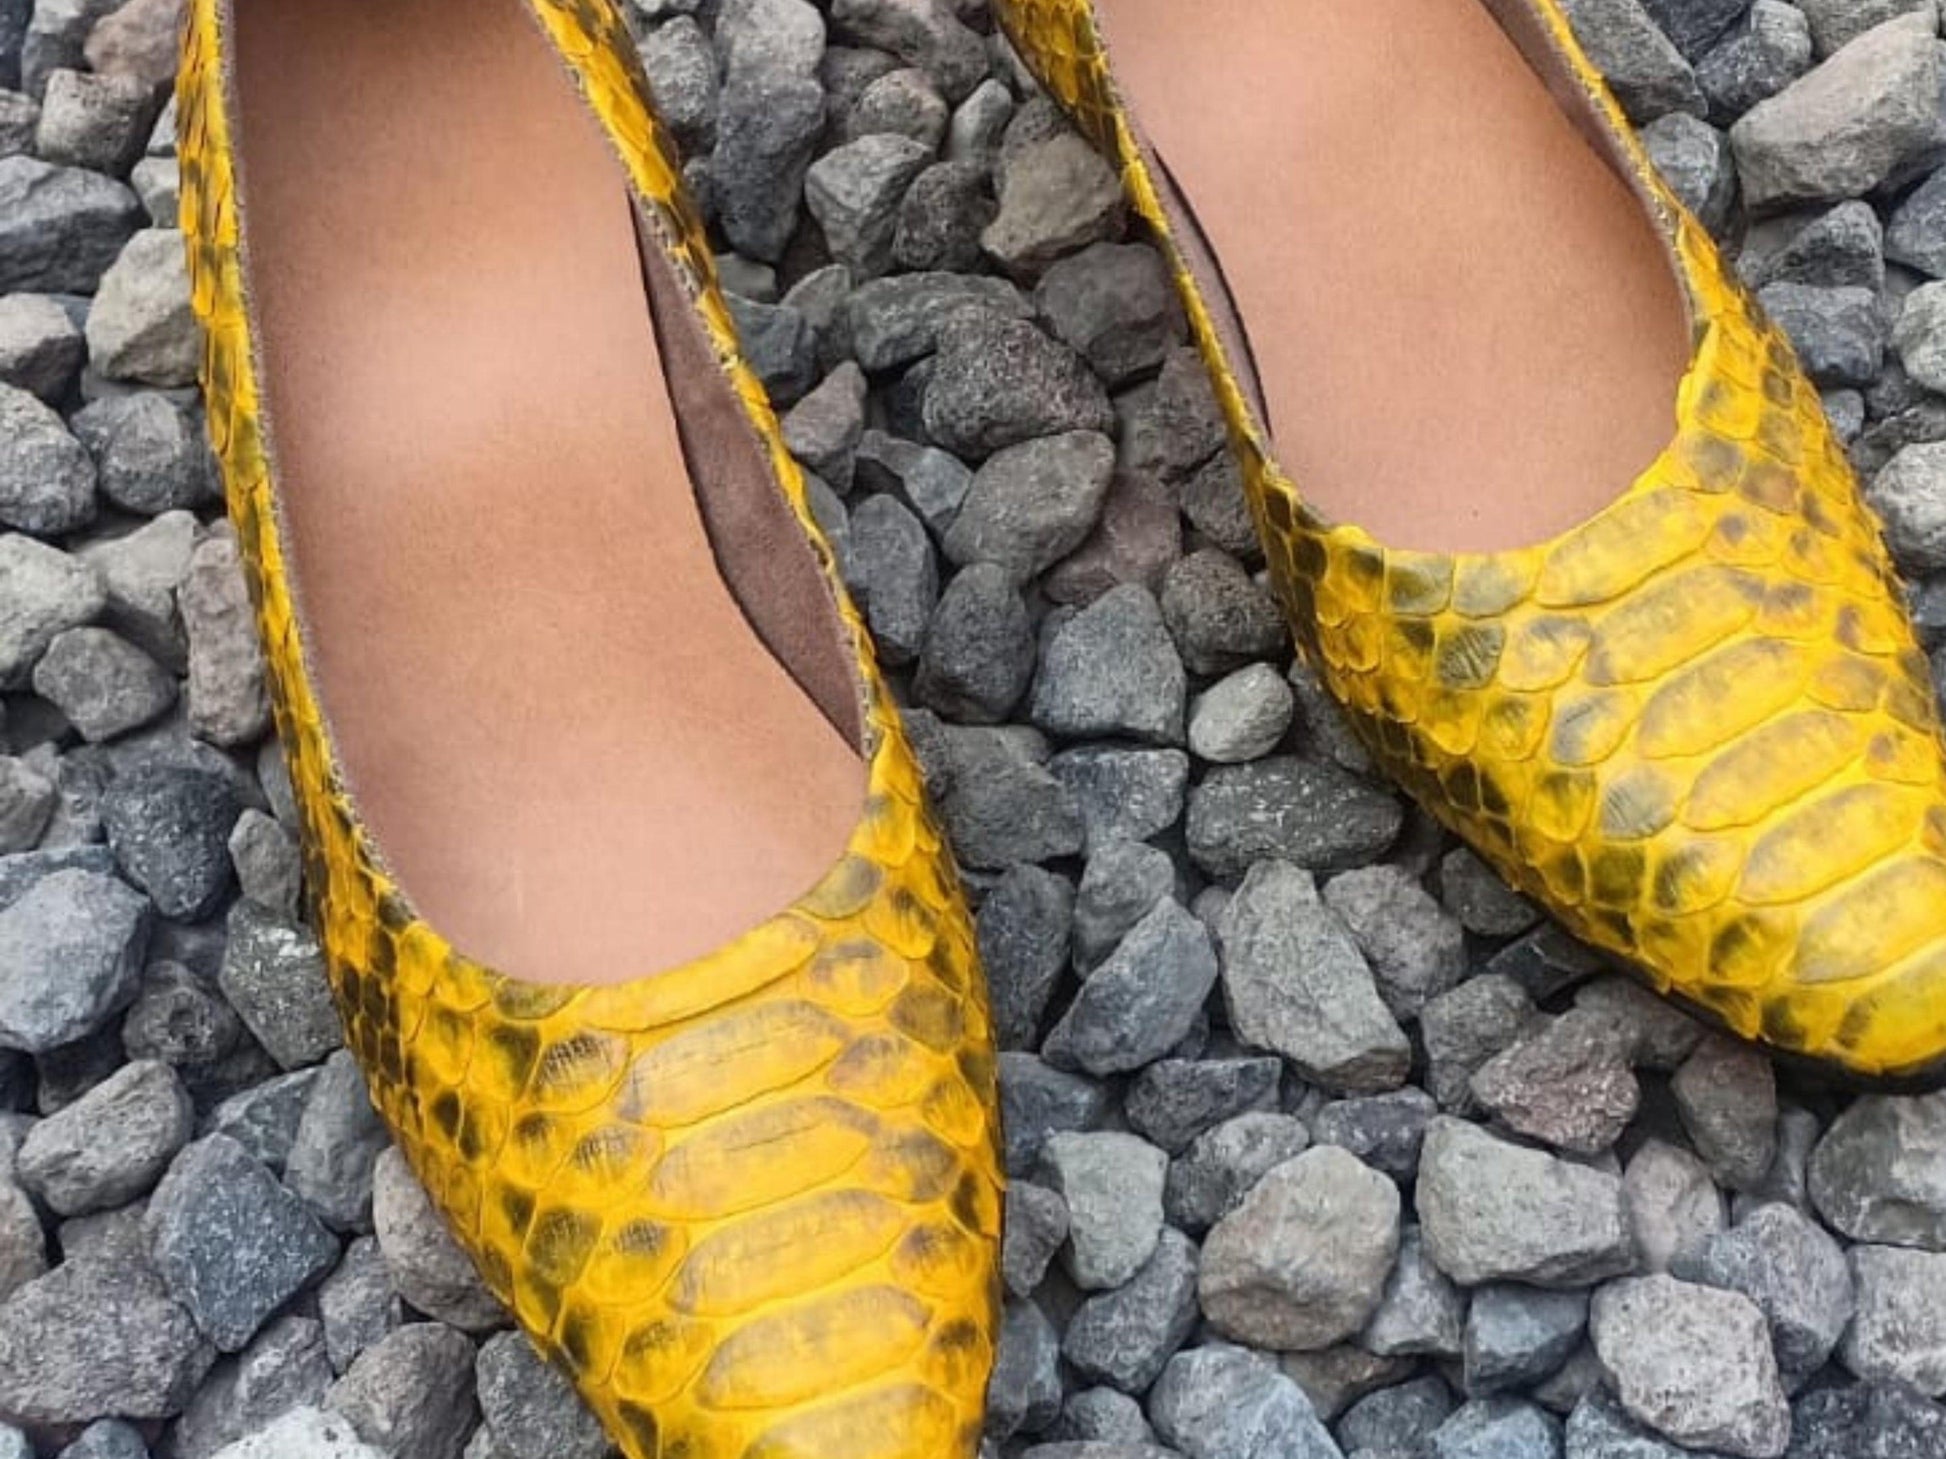 Shoes Snakeskin Loafers Womens Python Jacket by LFM Fashion